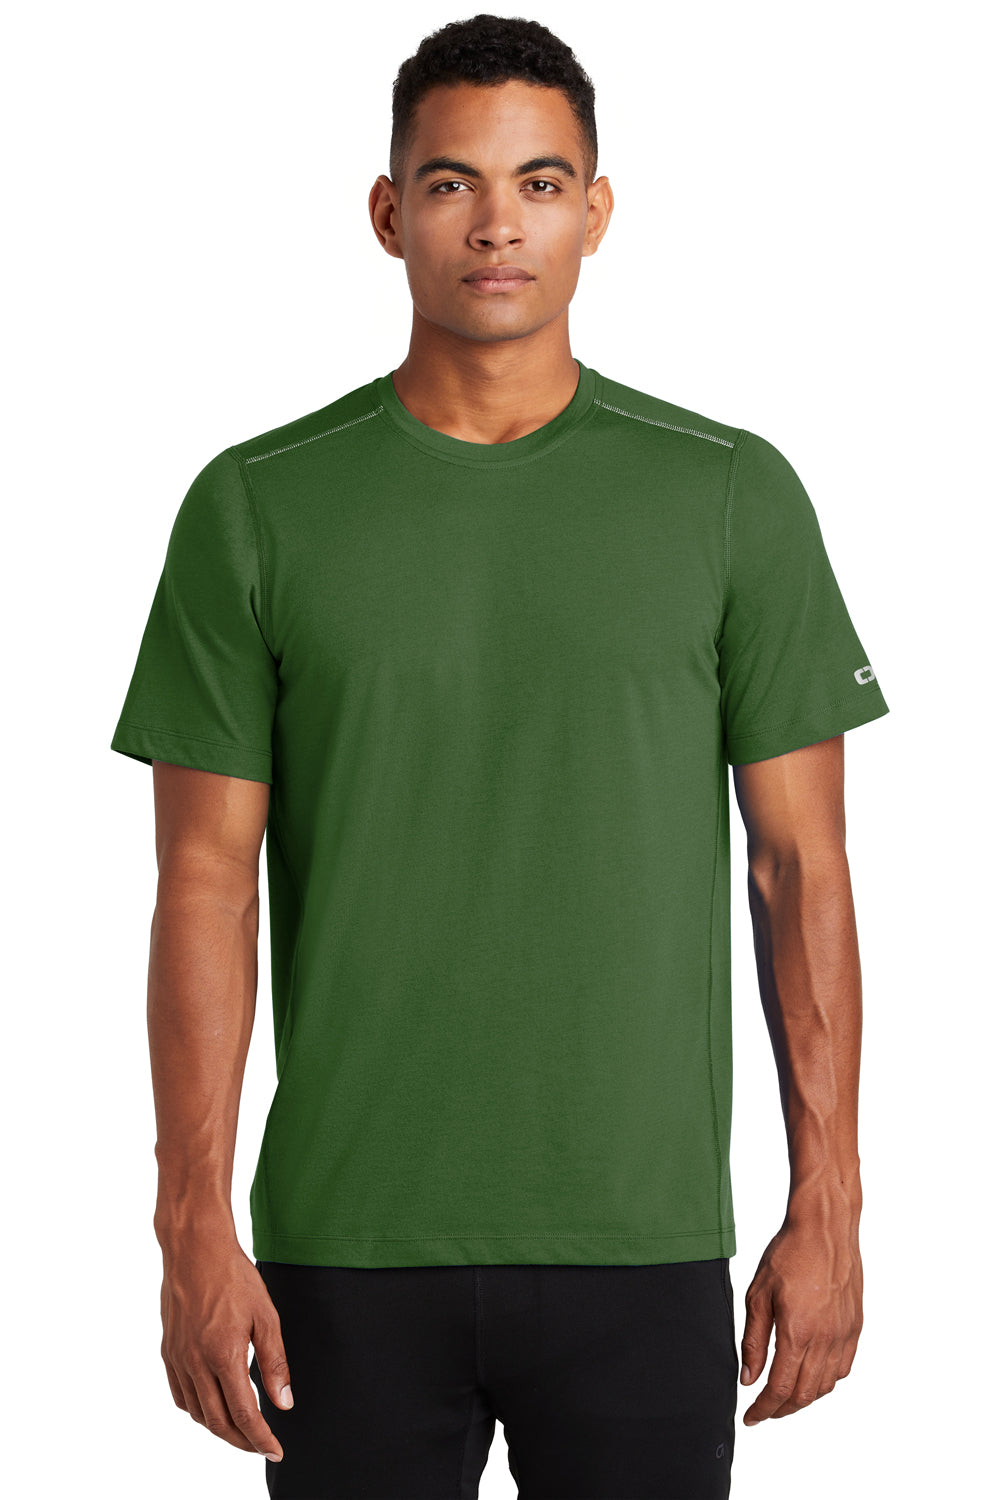 Ogio OE336 Mens Endurance Peak Jersey Moisture Wicking Short Sleeve Crewneck T-Shirt Green Front